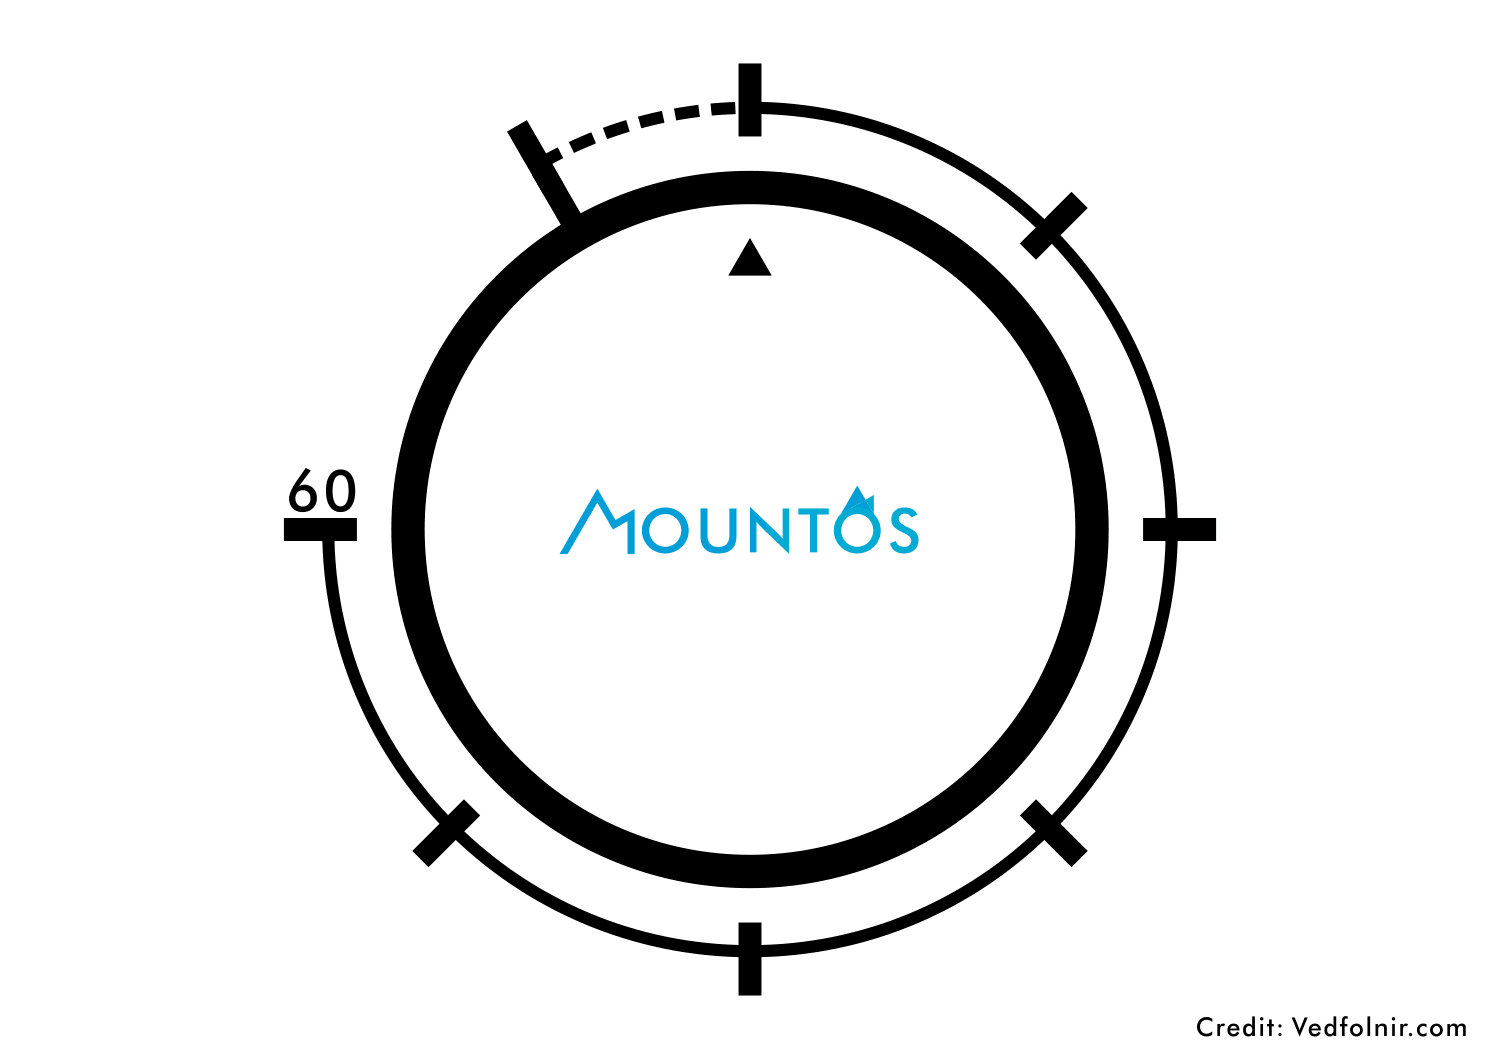 Oven_Countdown_Timer_Knob_60Mins_Designed_by_Vedfolnir_Mountos